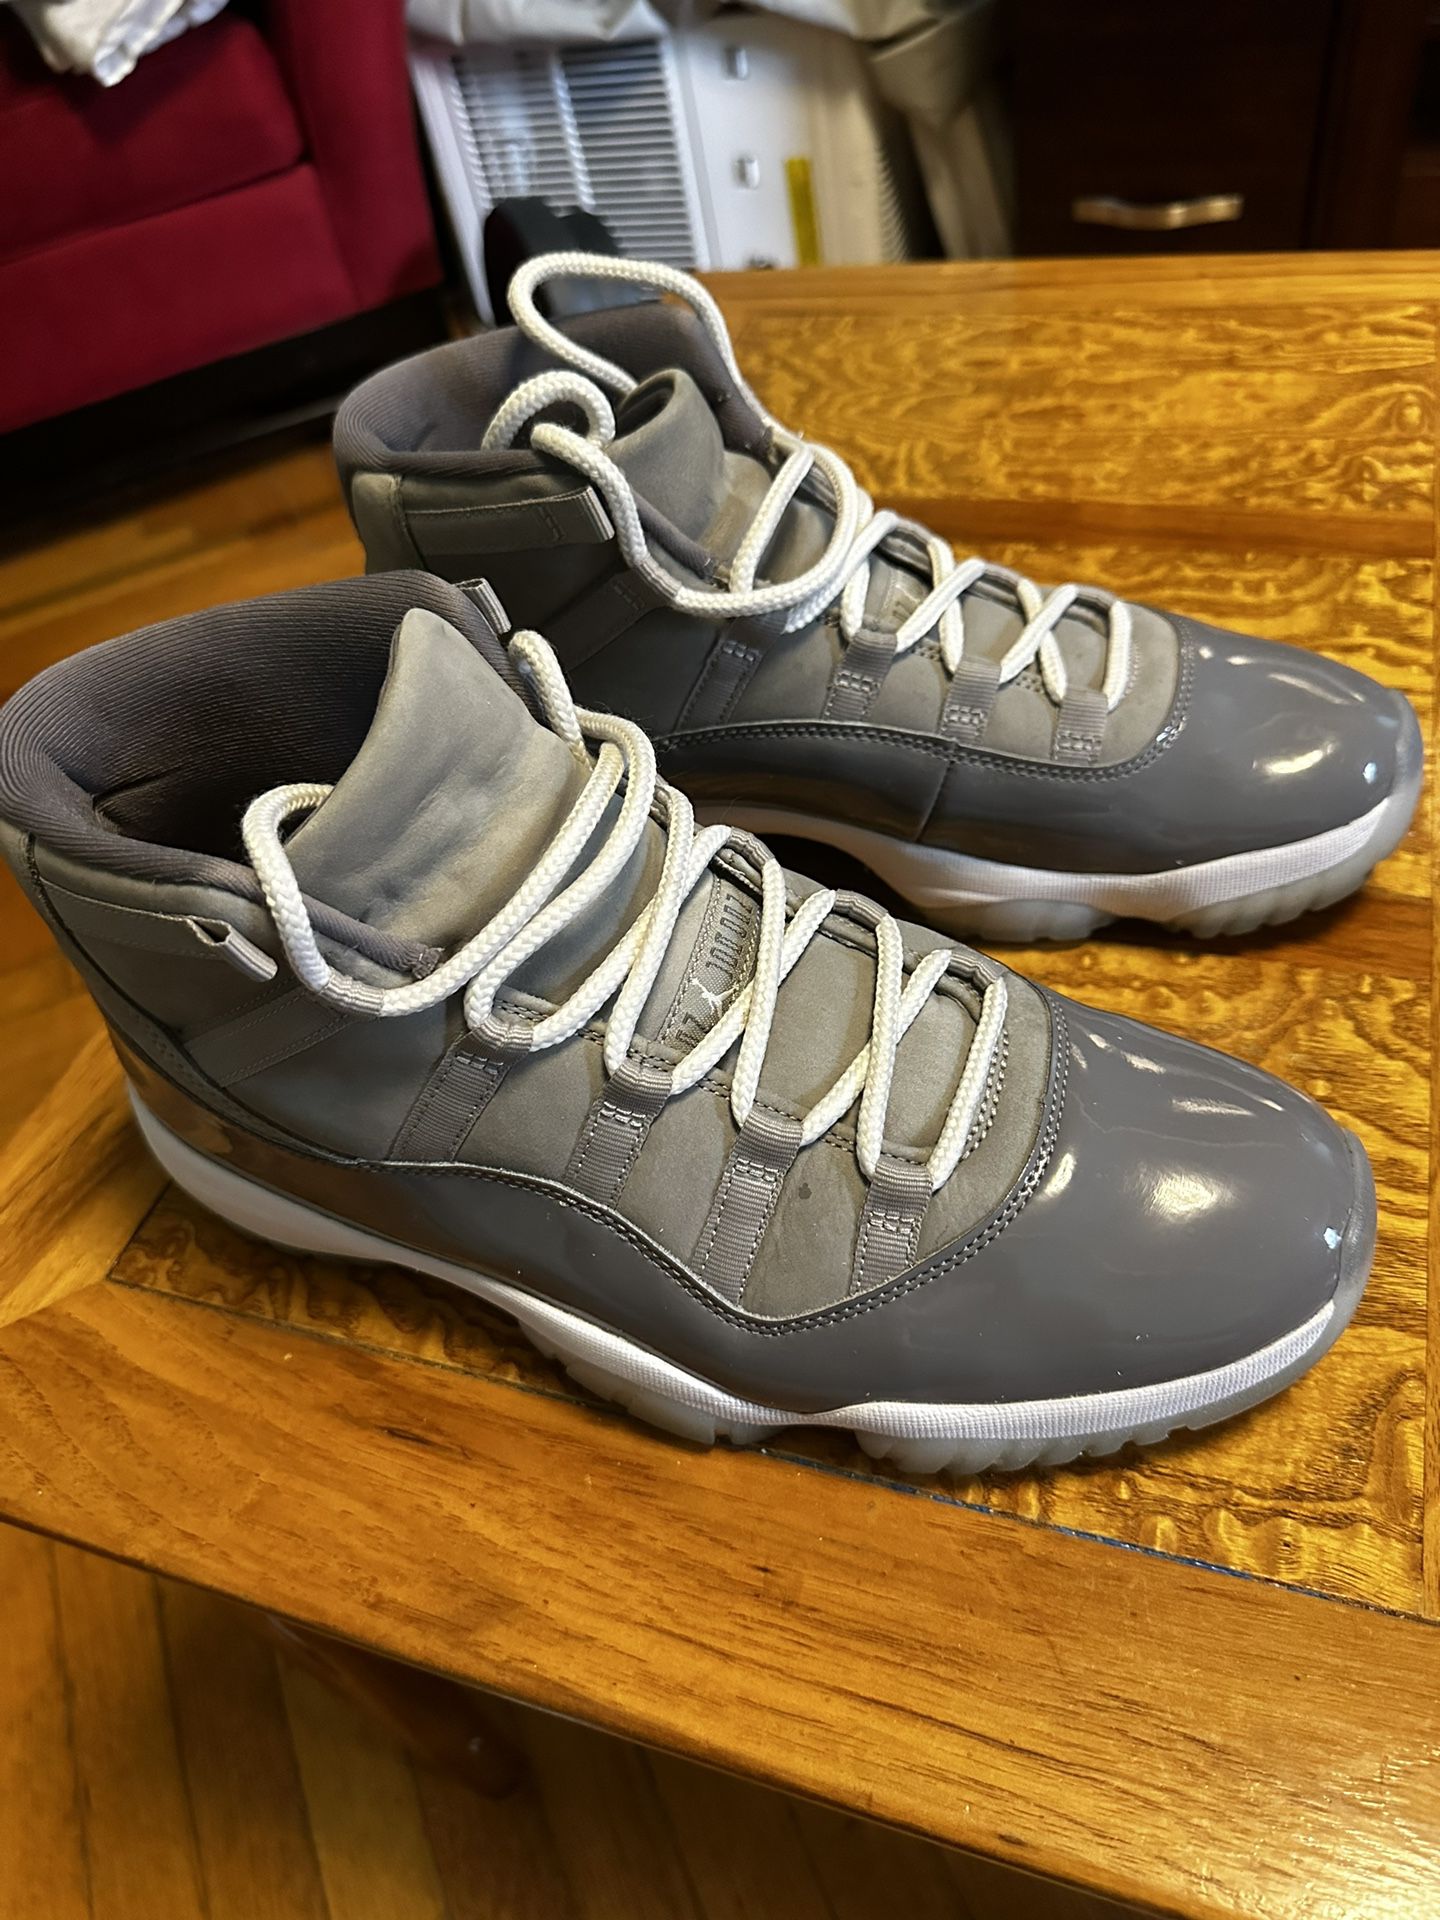 Jordan 11 Cool Greys Sz 11.5 (2021)